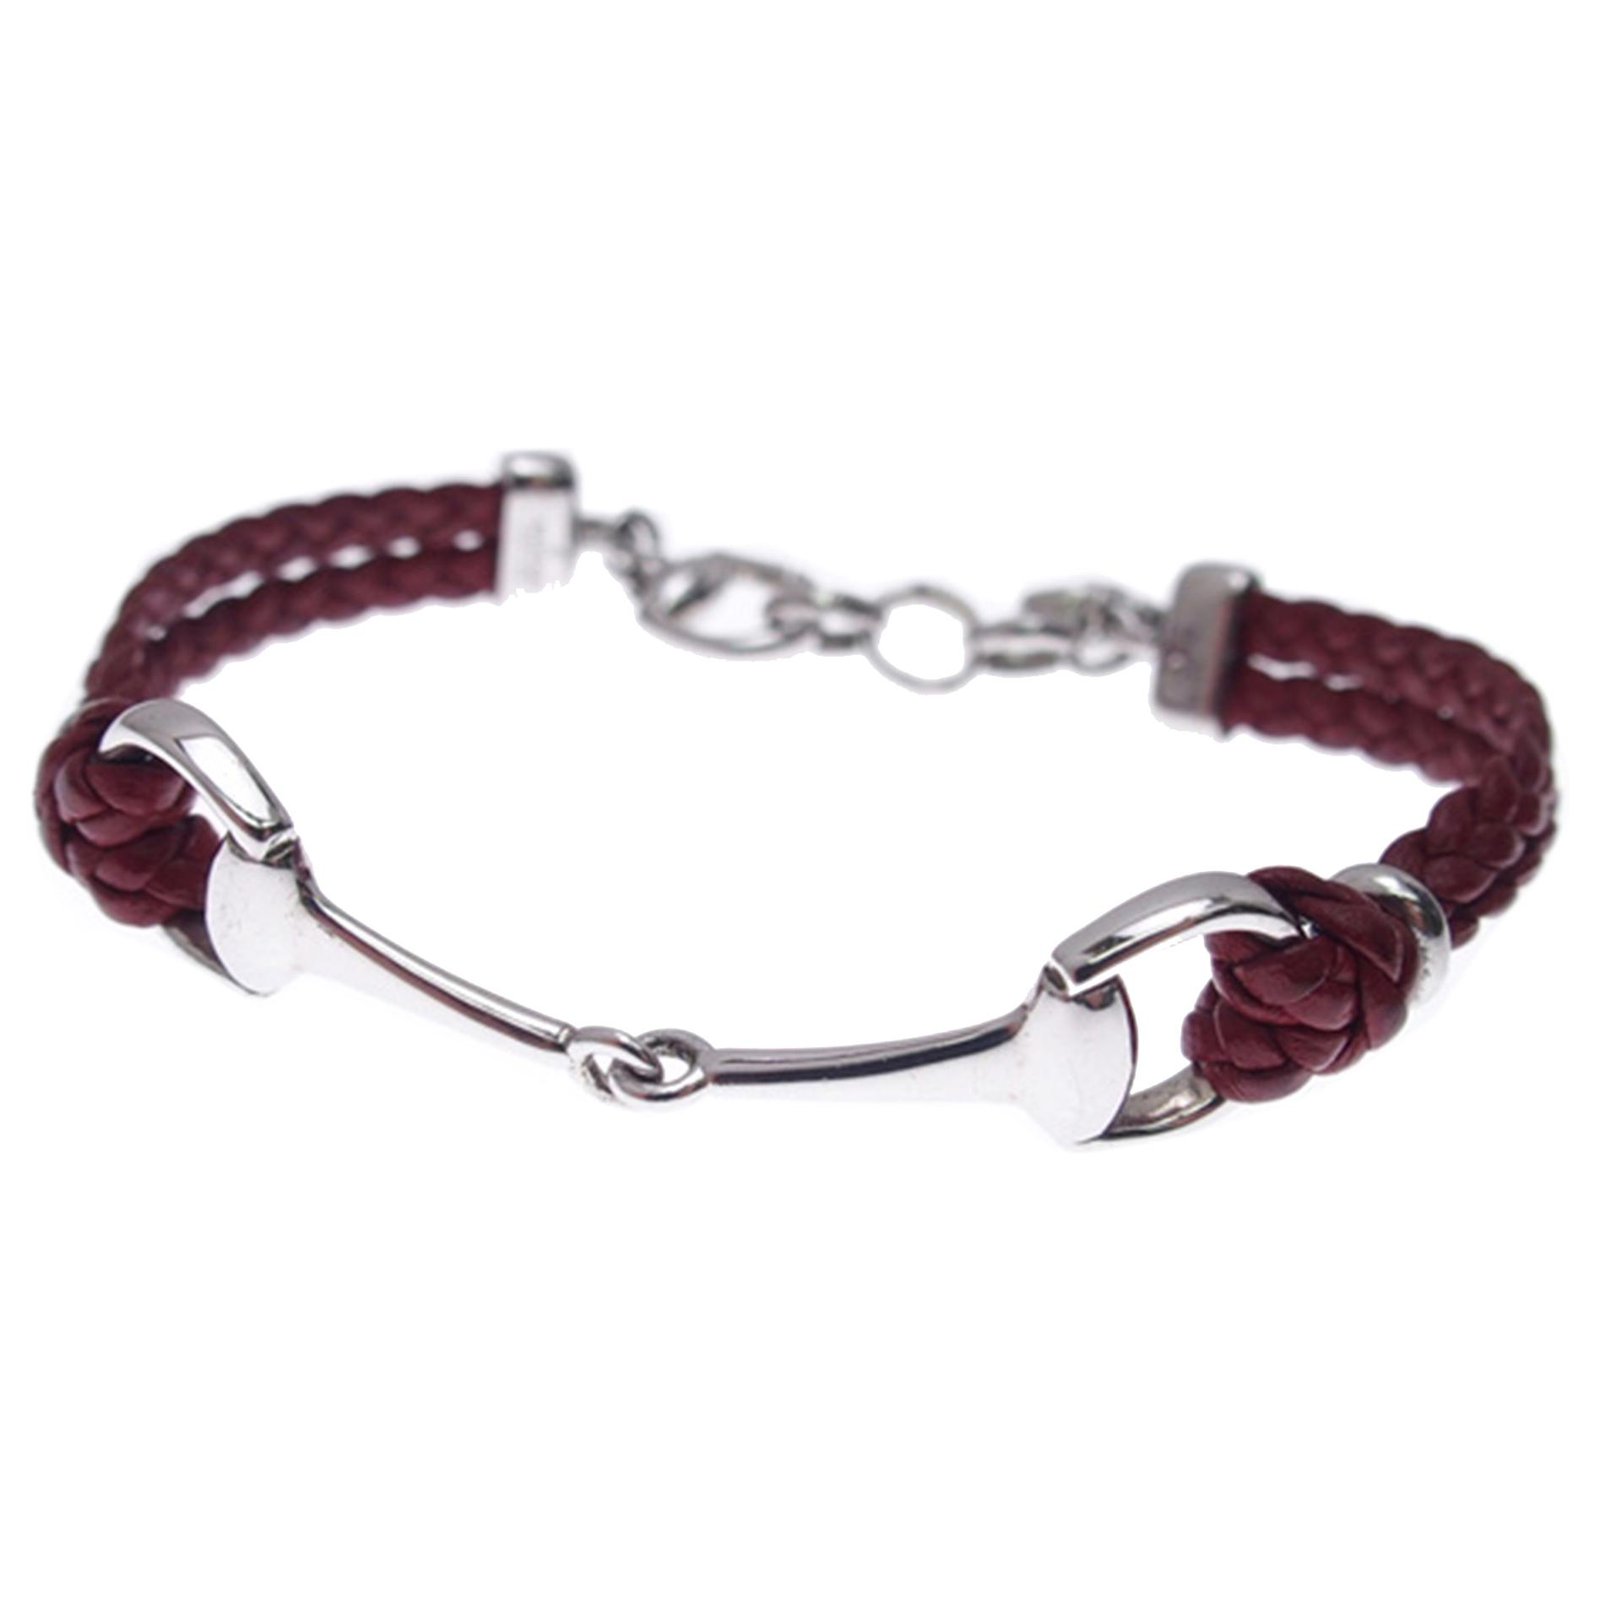 gucci horsebit bracelet leather